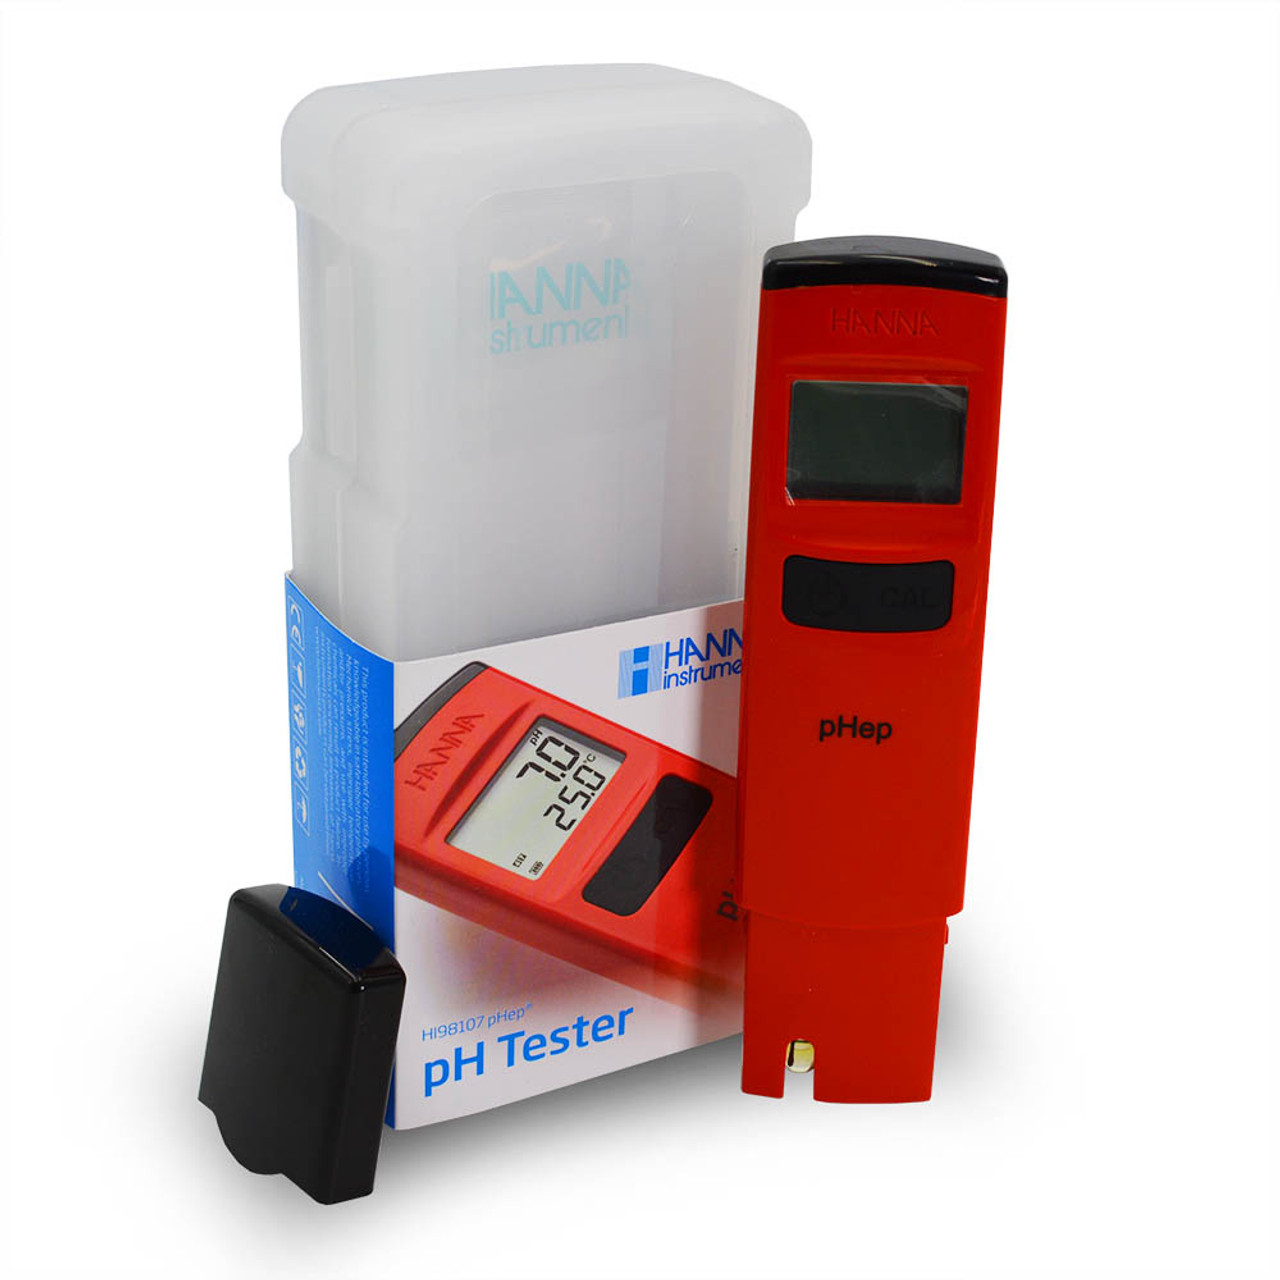 Waterproof Pocket pH Tester (HI98107) pHep® Instruments with Resolution Hanna - - 0.1